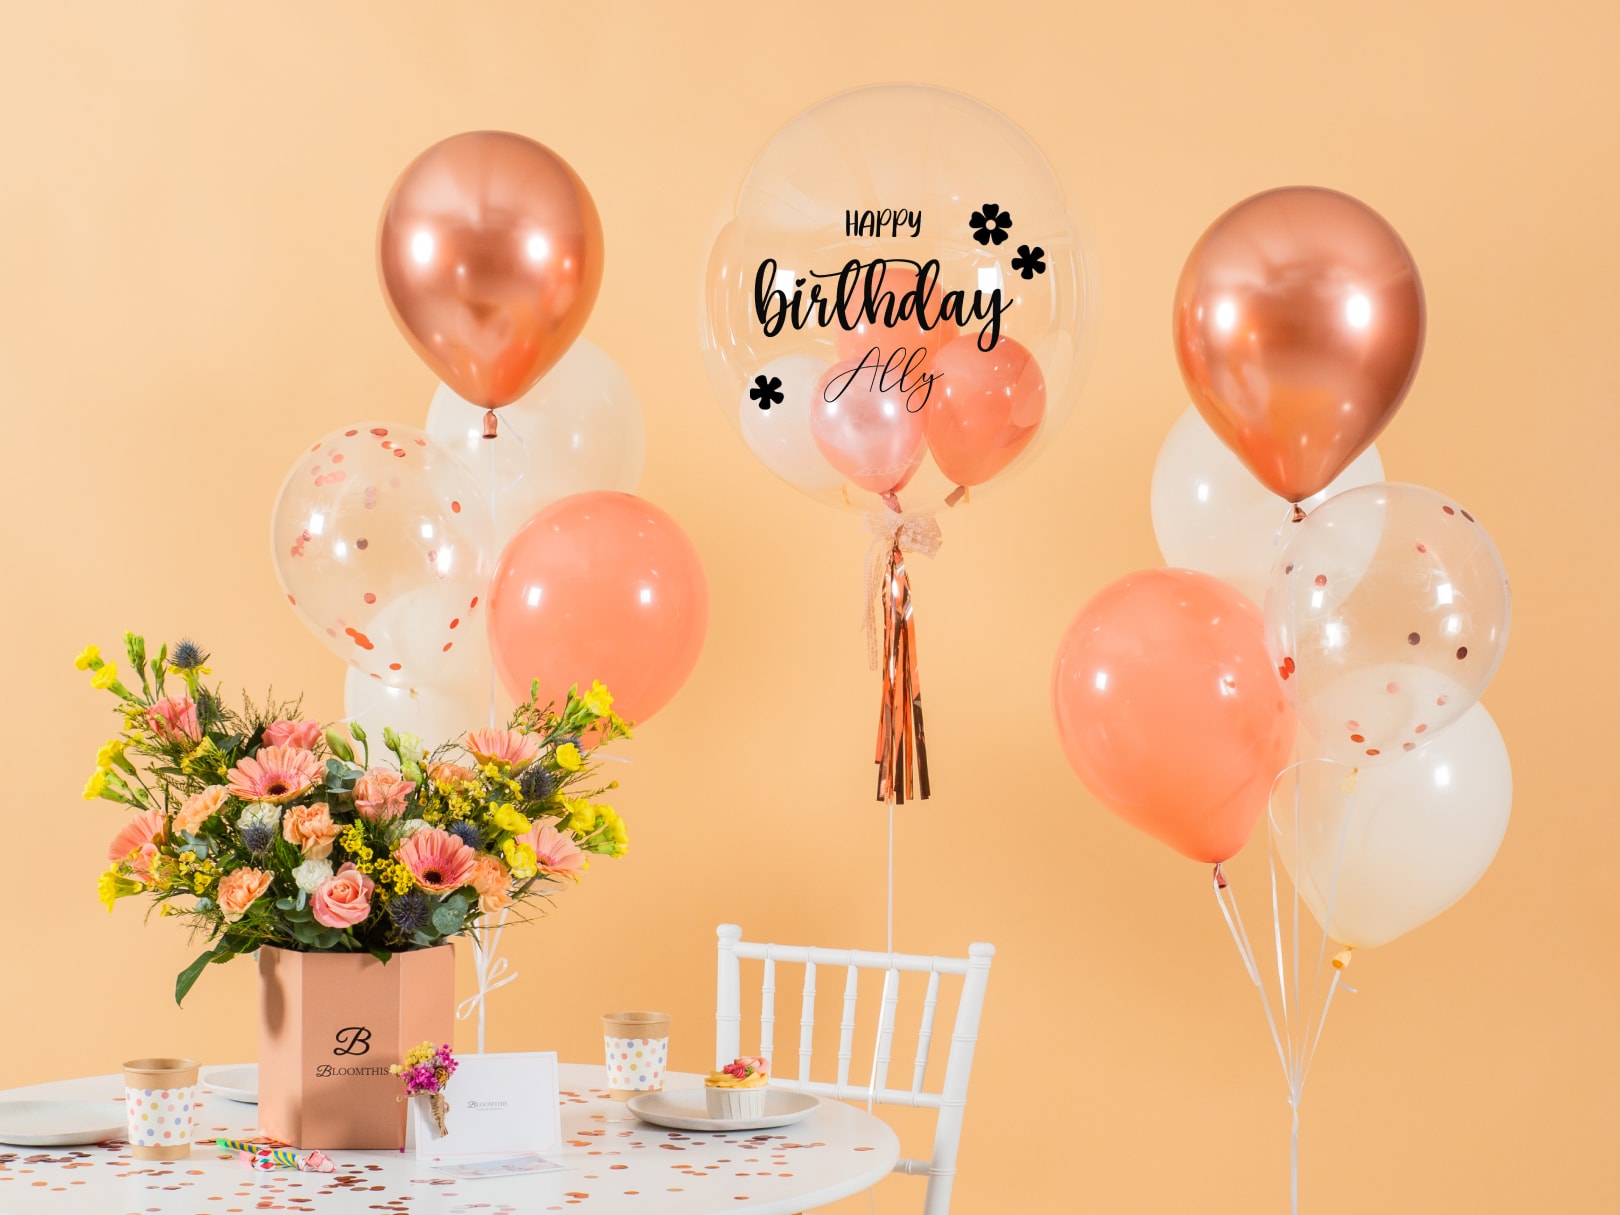 bloomthis-balloons-helium-balloons-usp-01-themed-helium-balloon-bouquets